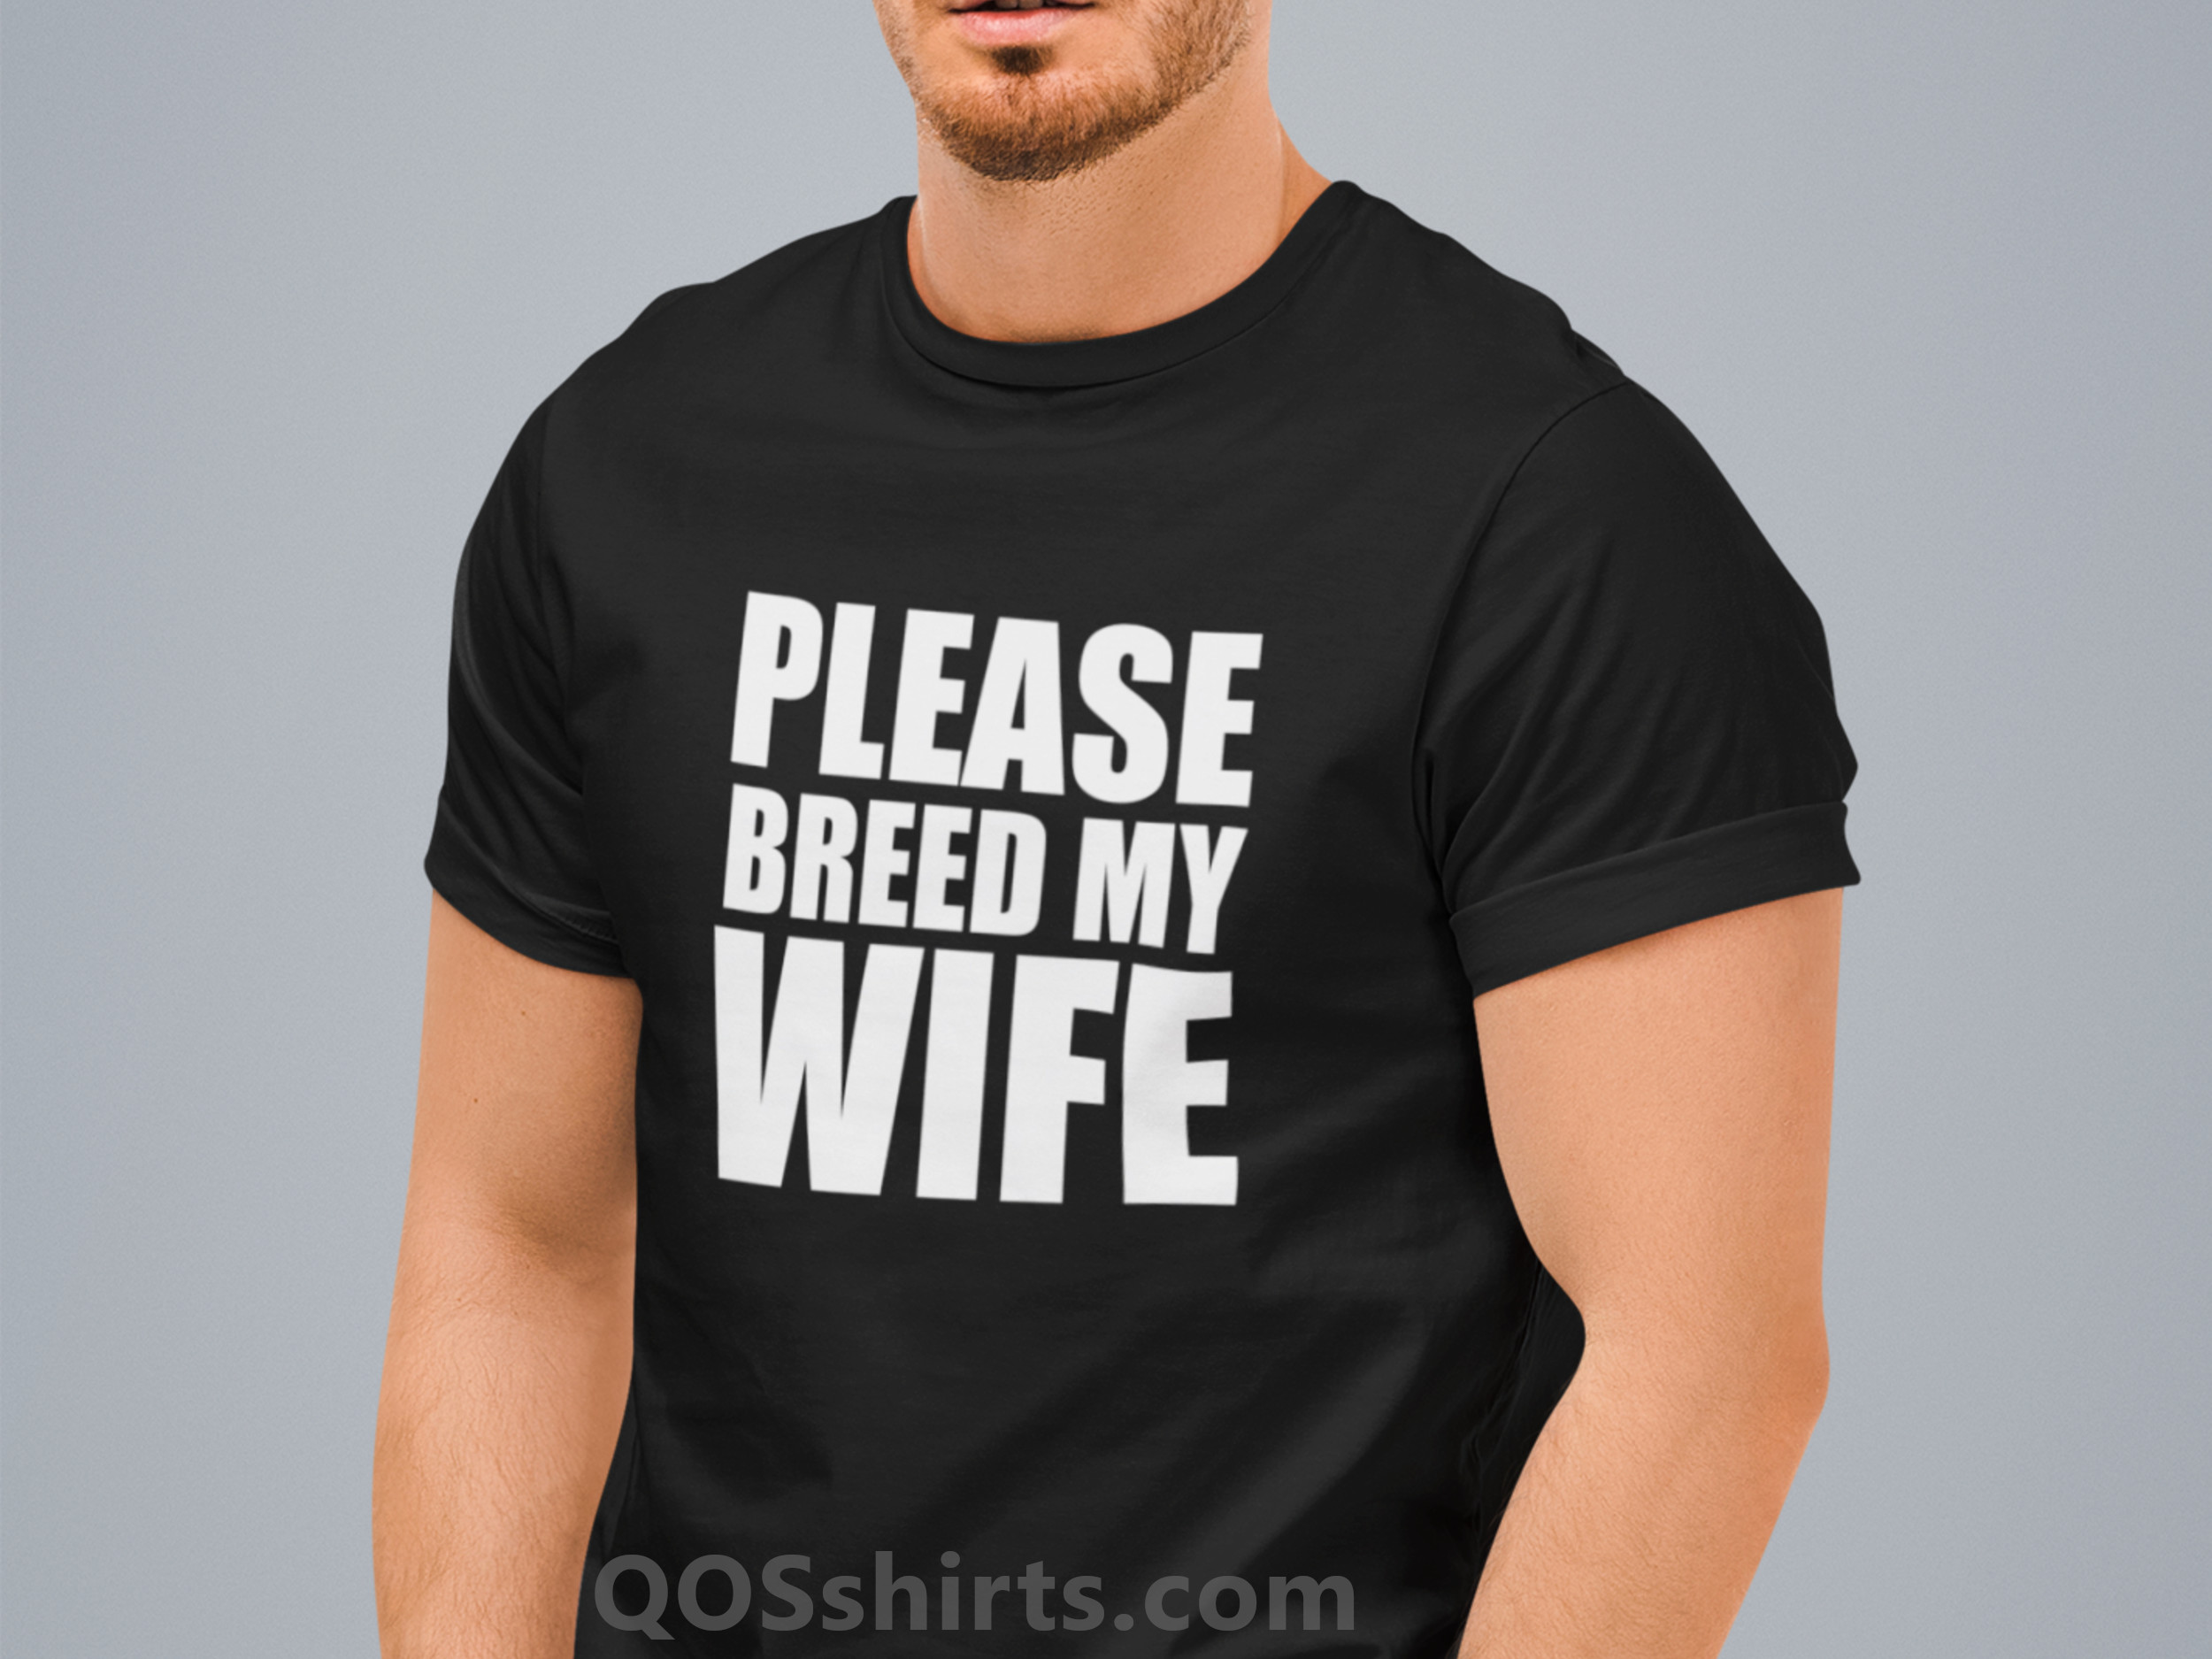 Please breed my wife